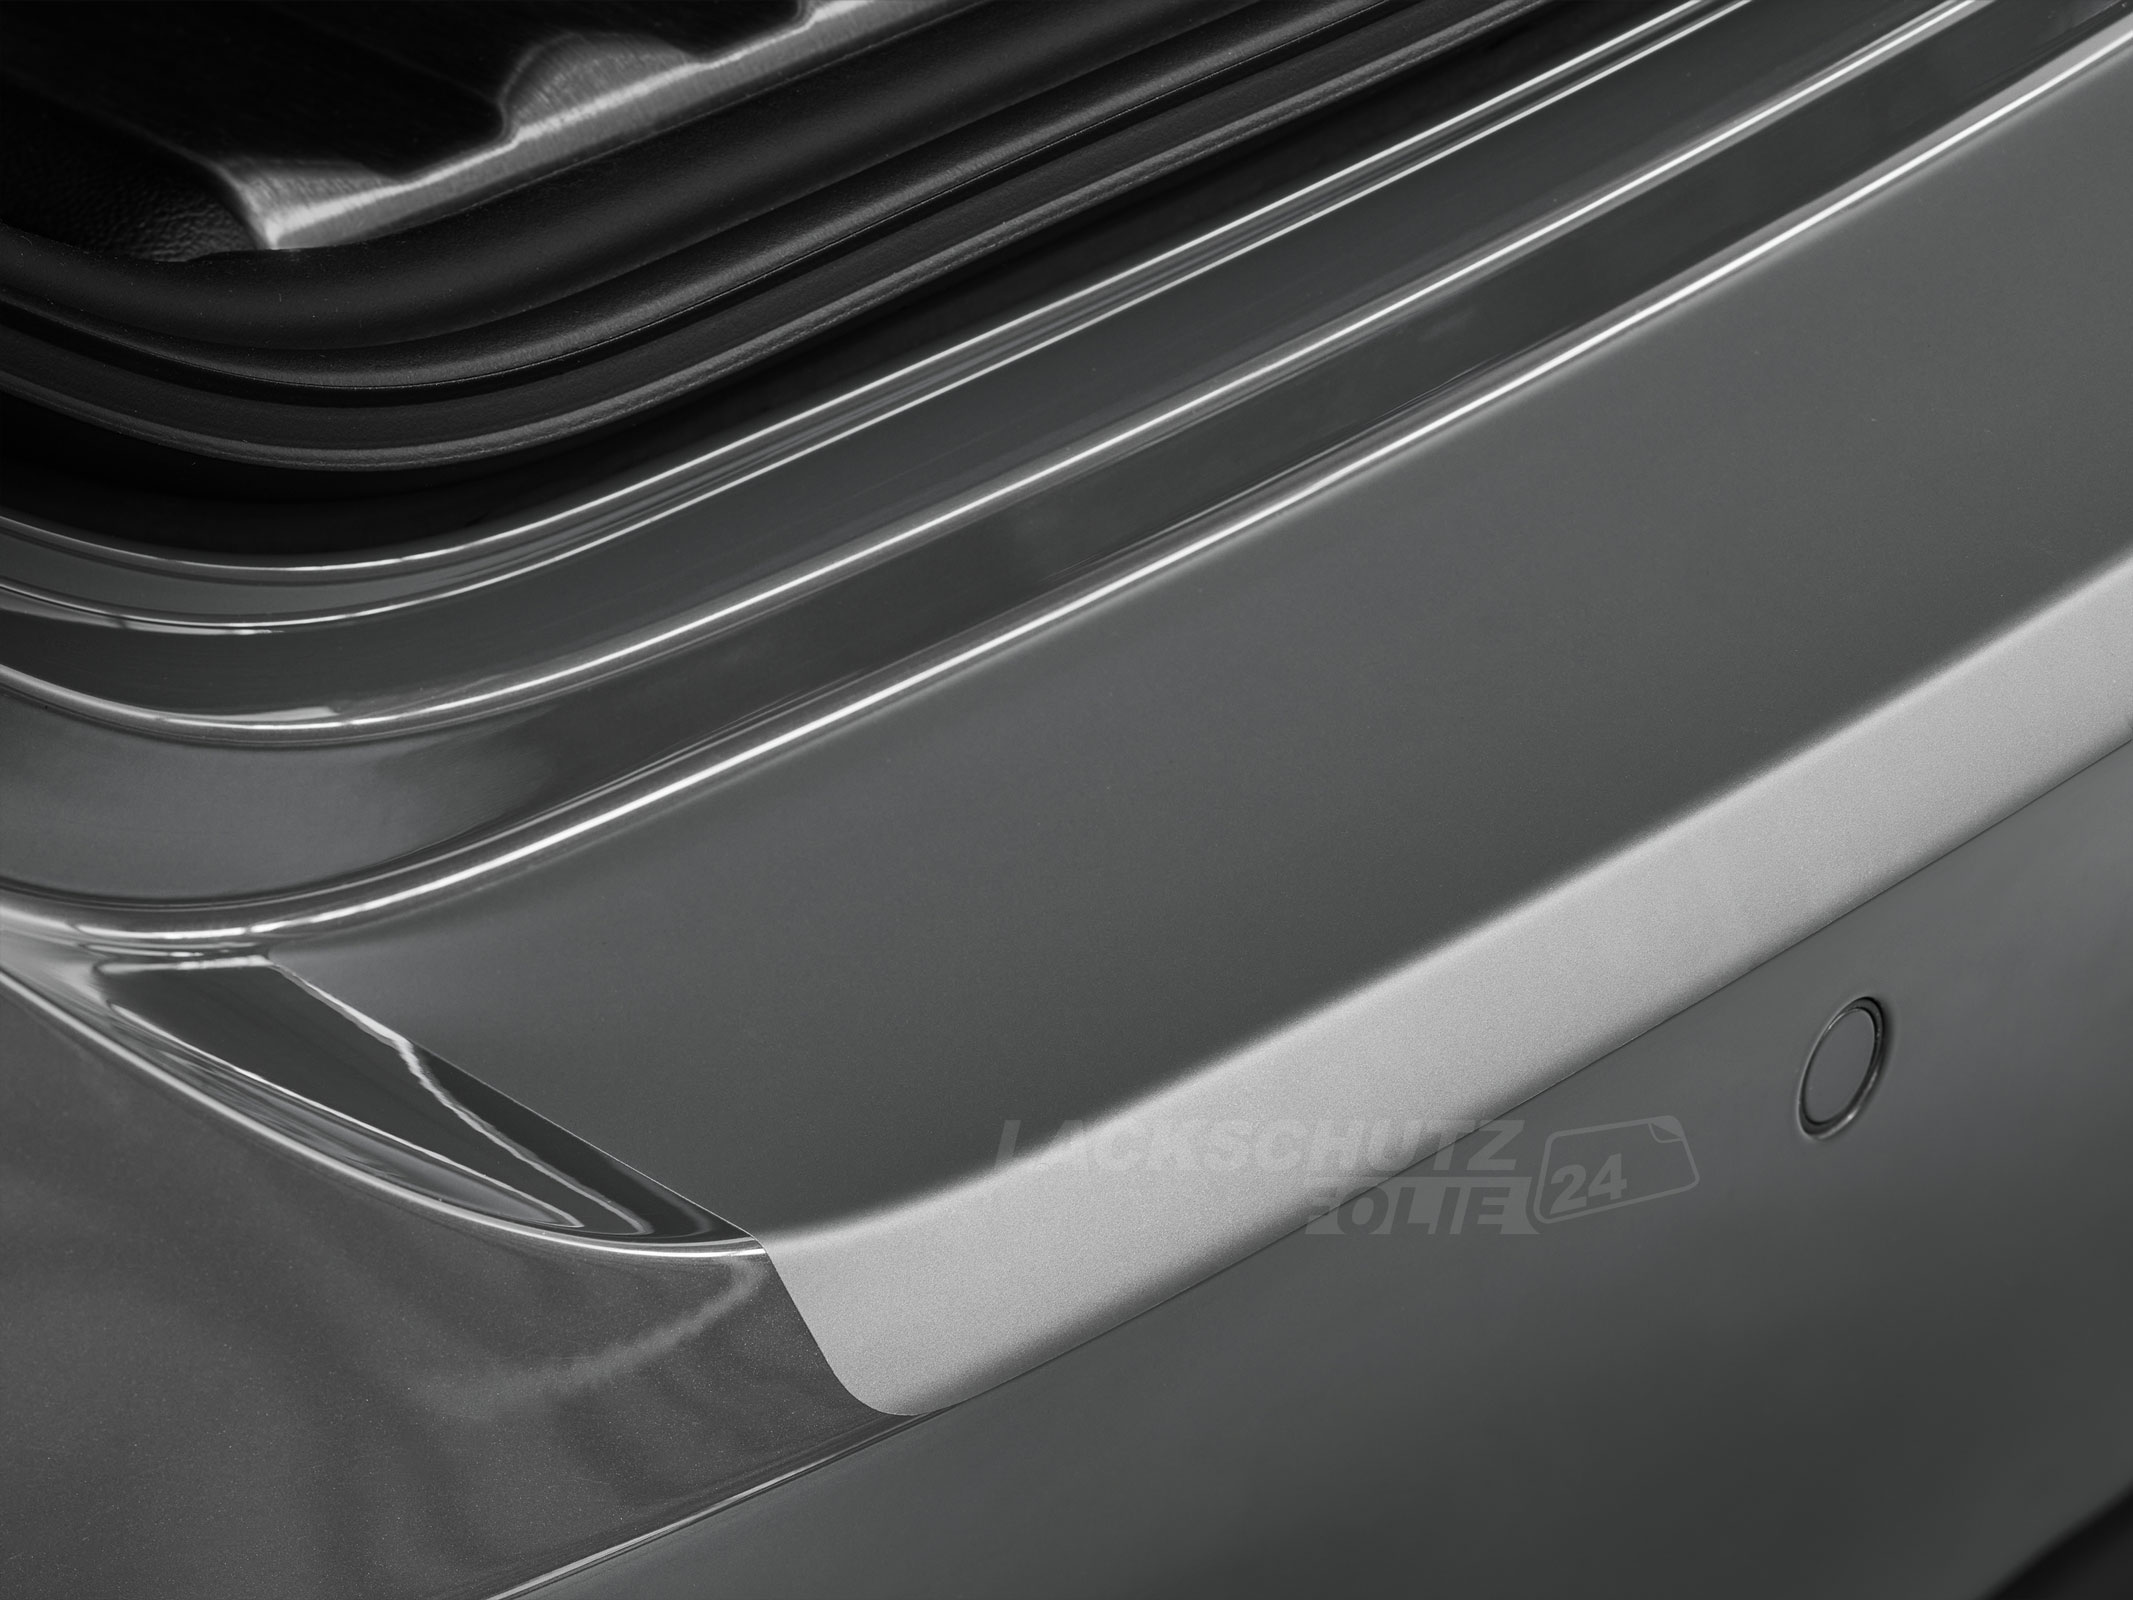 Ladekantenschutzfolie - Transparent Glatt MATT 110 µm stark  für BMW 7er Typ G11, BJ 10/2015-12/2018